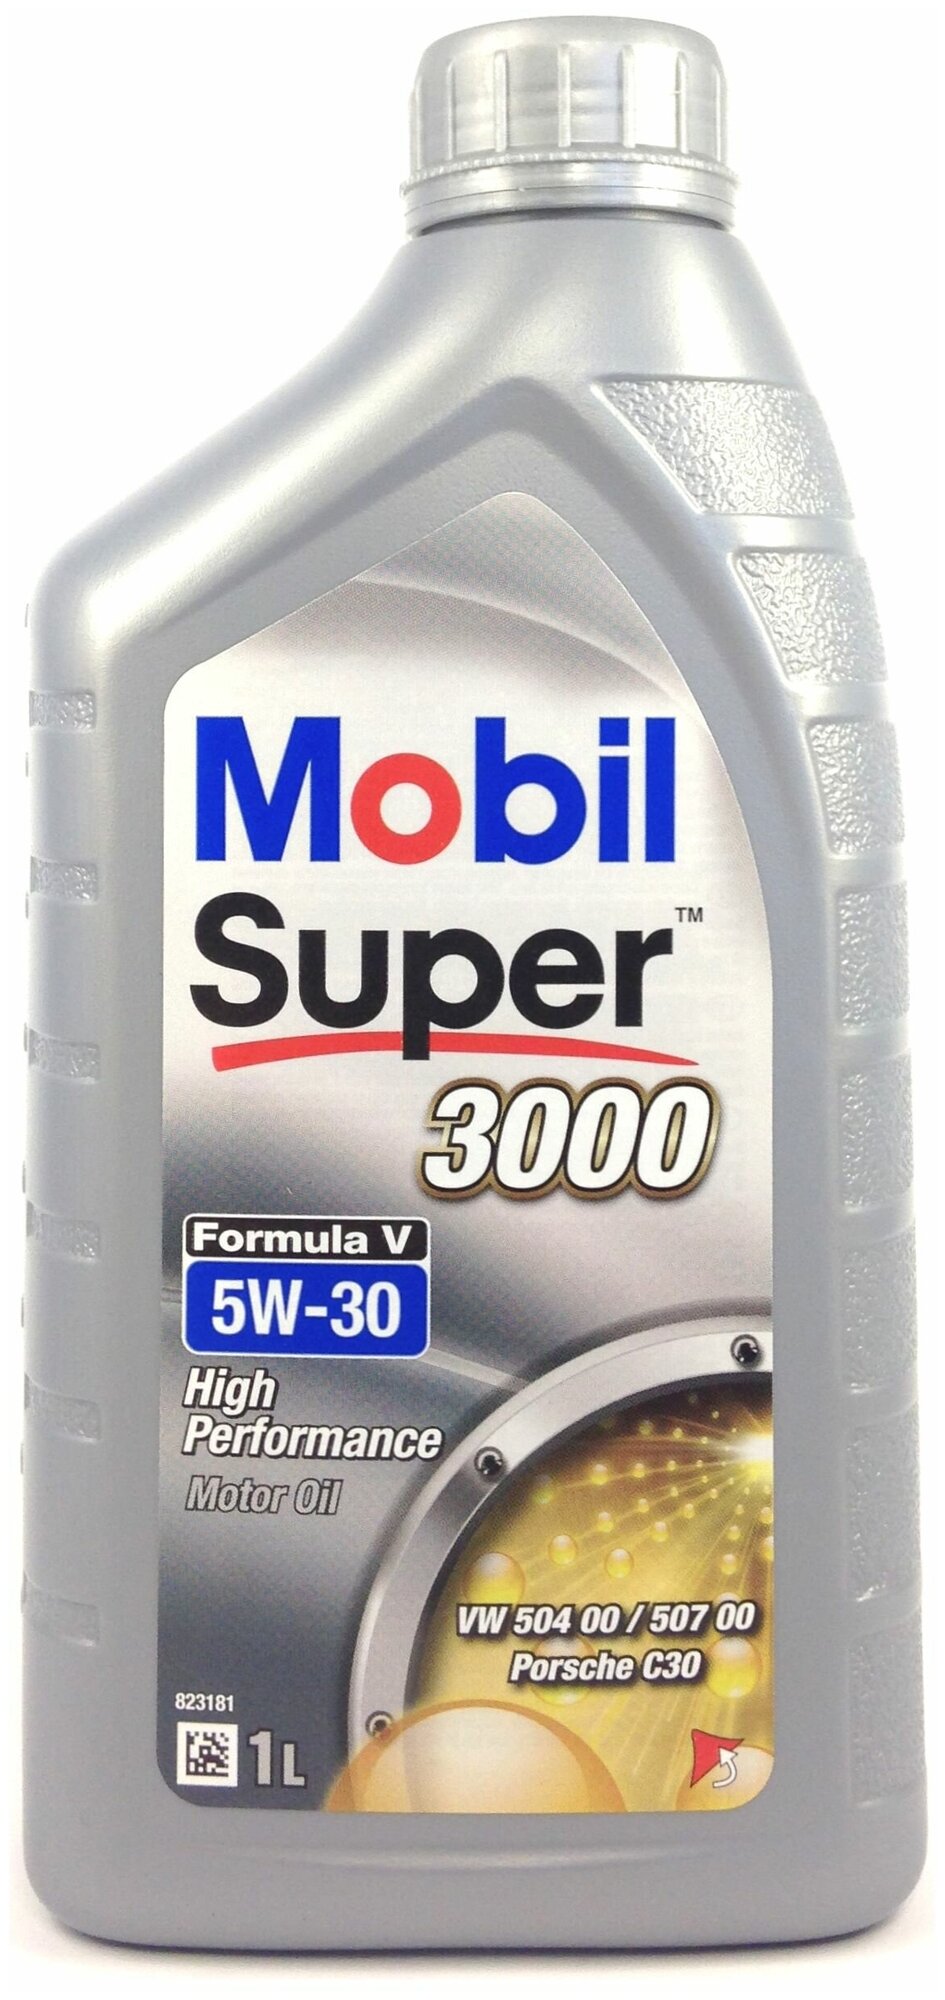 MOBIL 152356 Mobil Super 3000 Formula V 5W-30 1 моторное масо